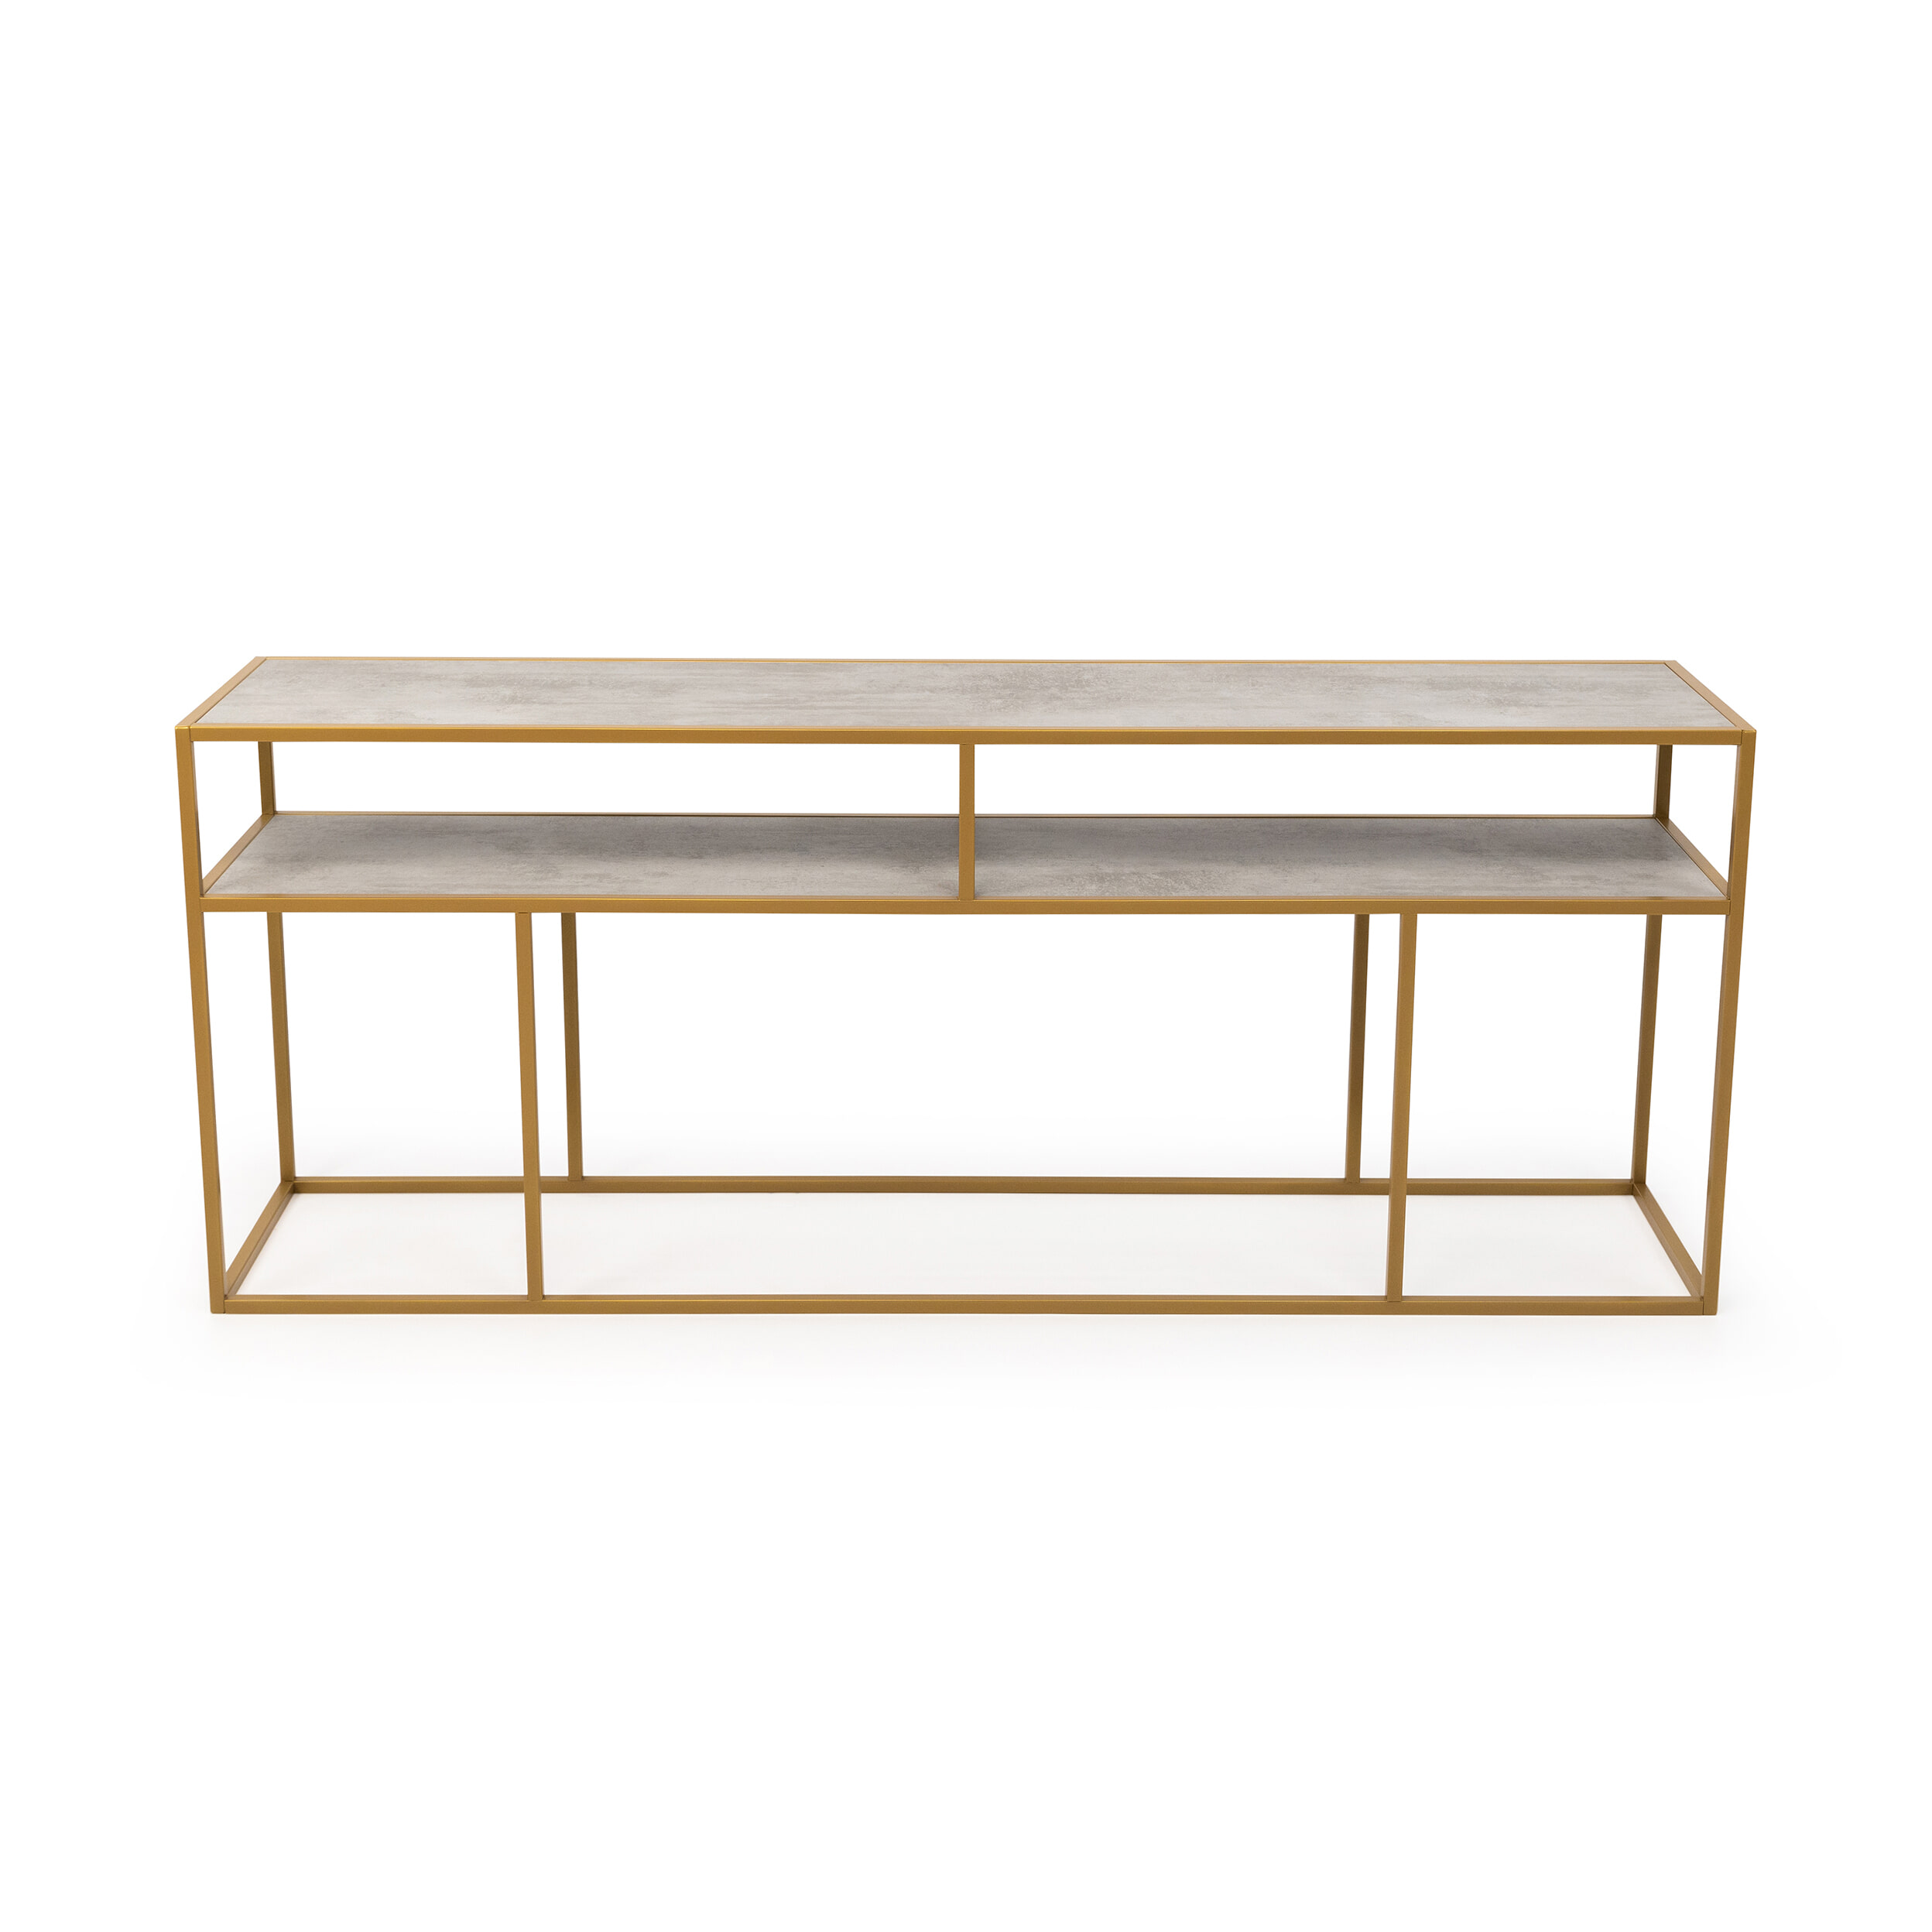 STALUX Side-table Teun 200cm - goud / beton